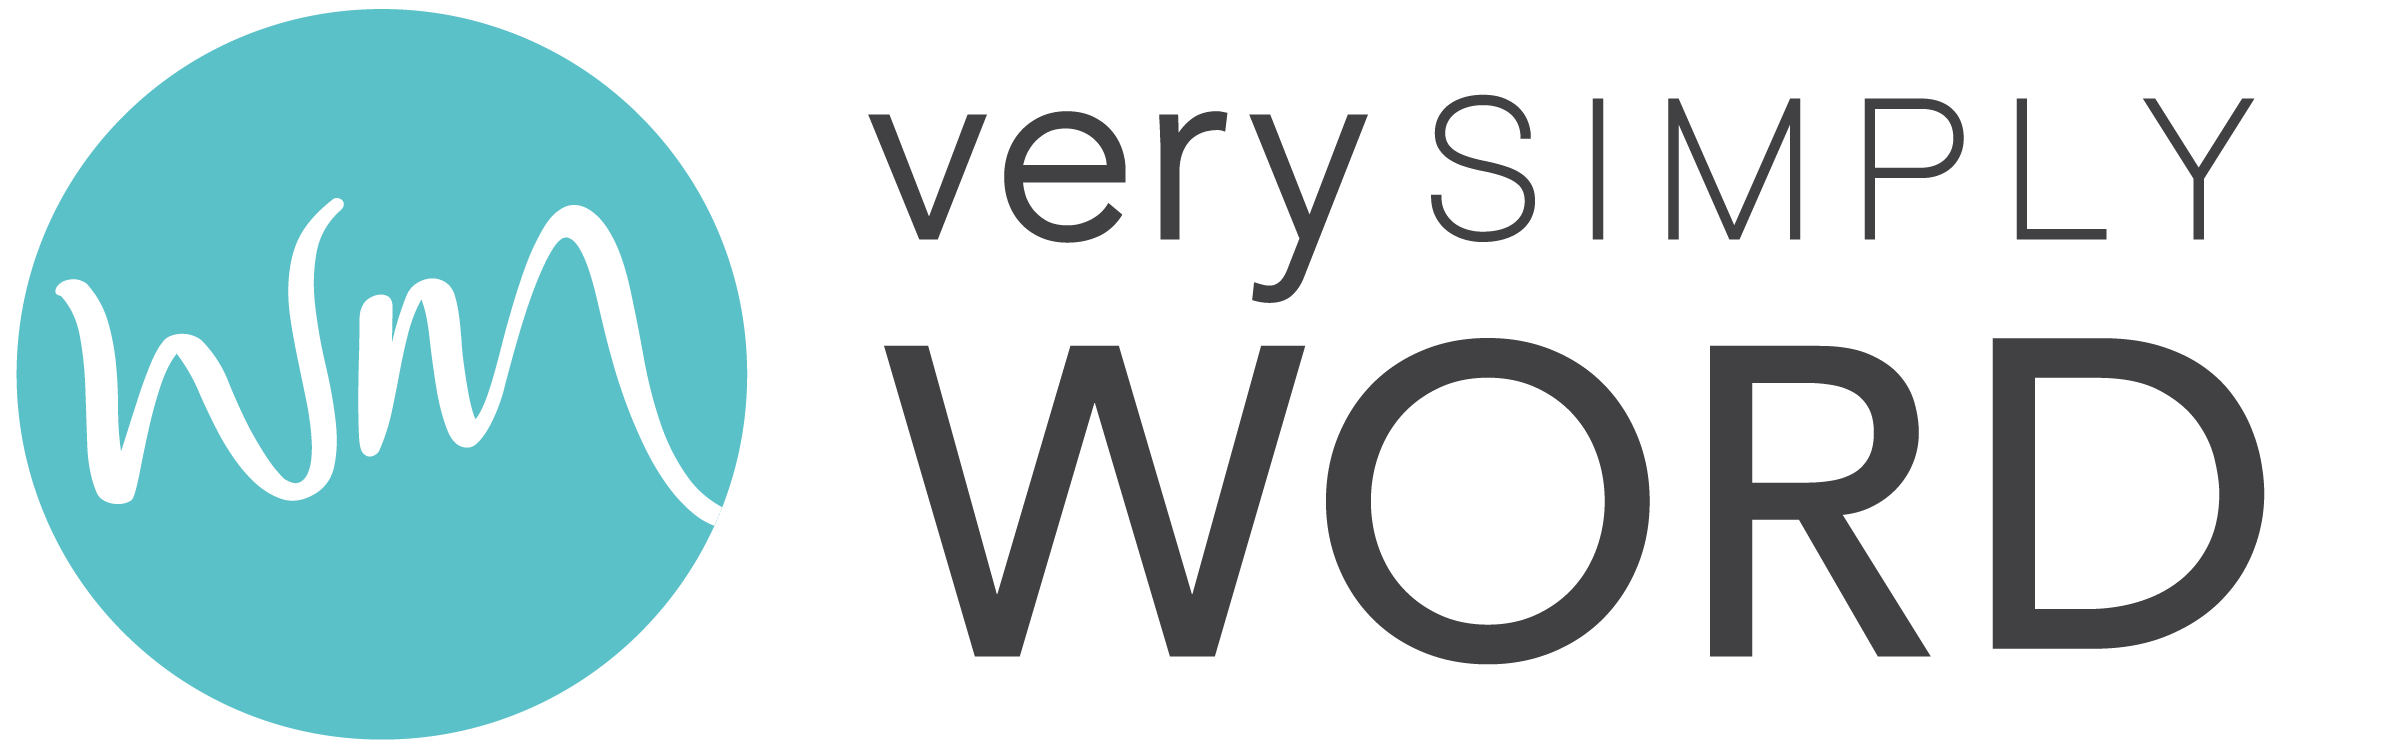 Very Simply Word Logo.jpg